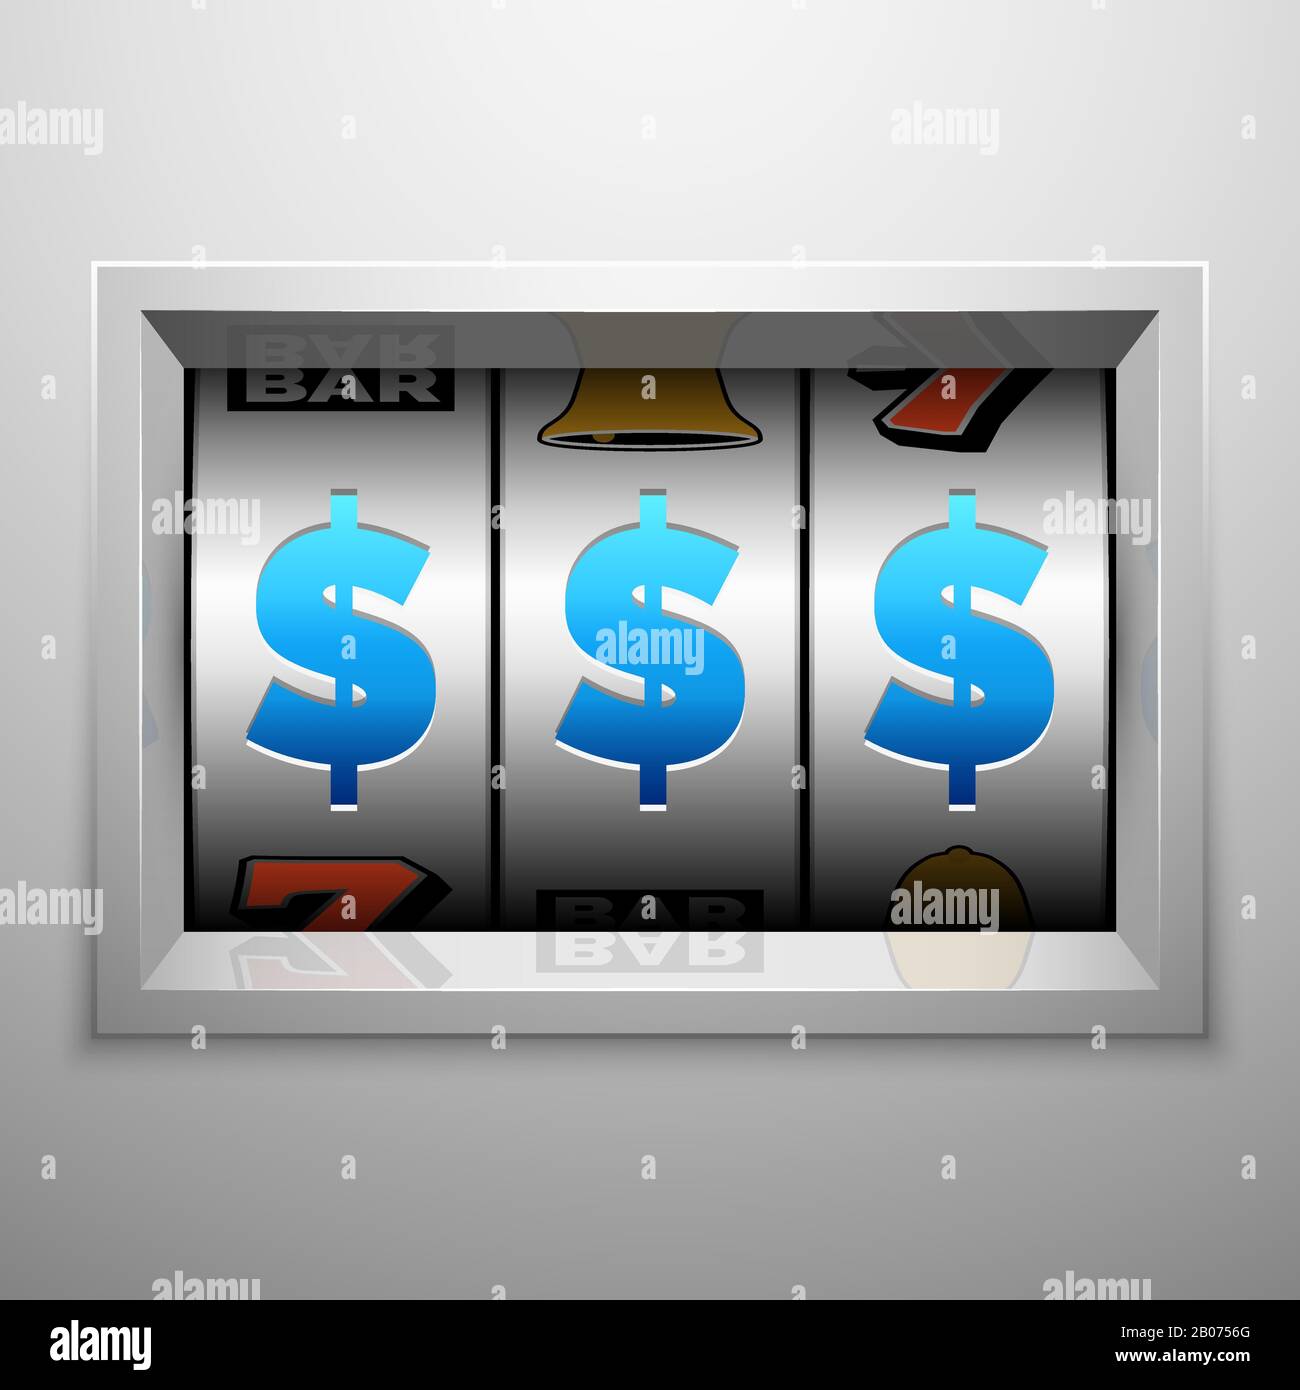 Slot machine, fruit machine or one armed bandit scoreboard. Gambling puggy vector concept. Winning jackpot in casino game illustration Stock Vector